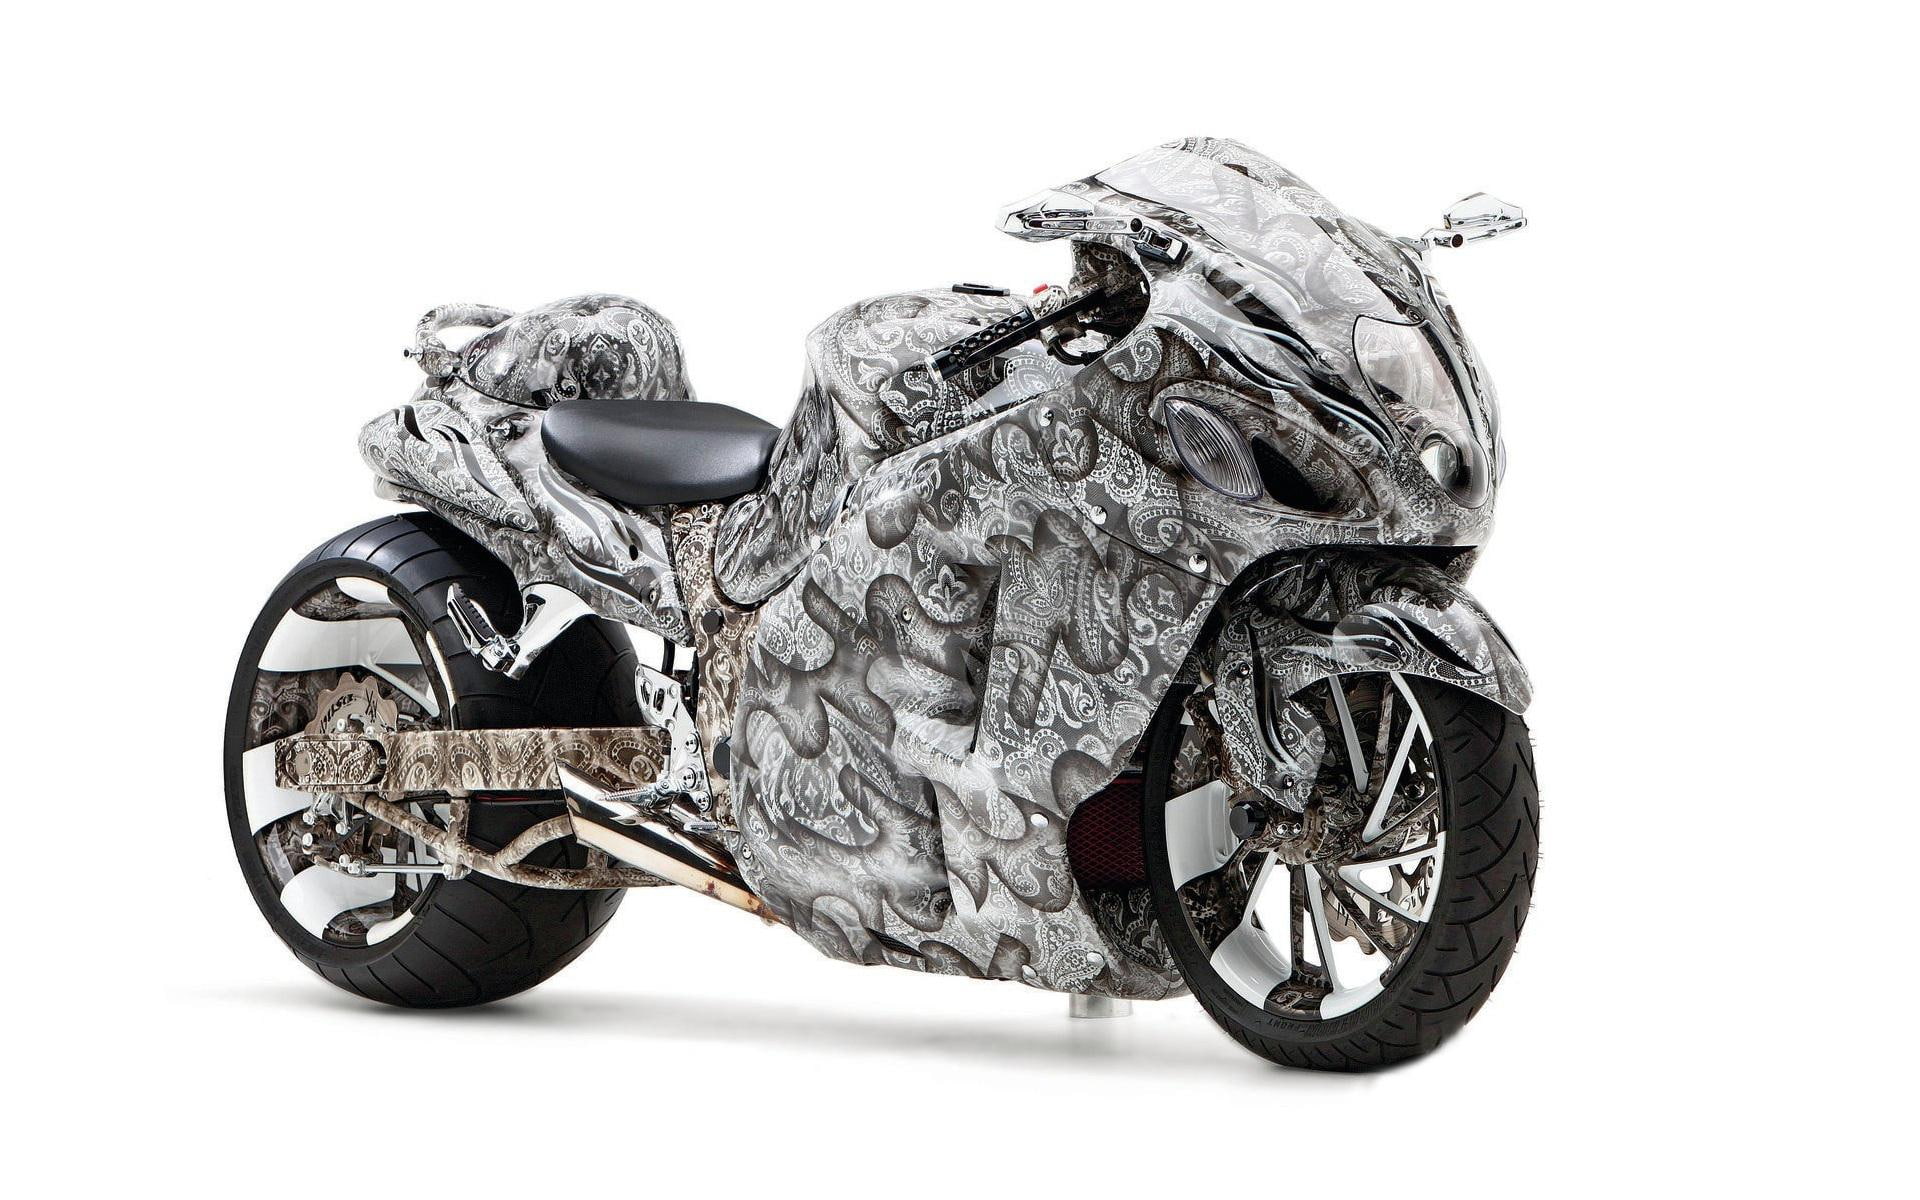 Suzuki Hayabusa, black and gray sports motorcycle, motorcycles